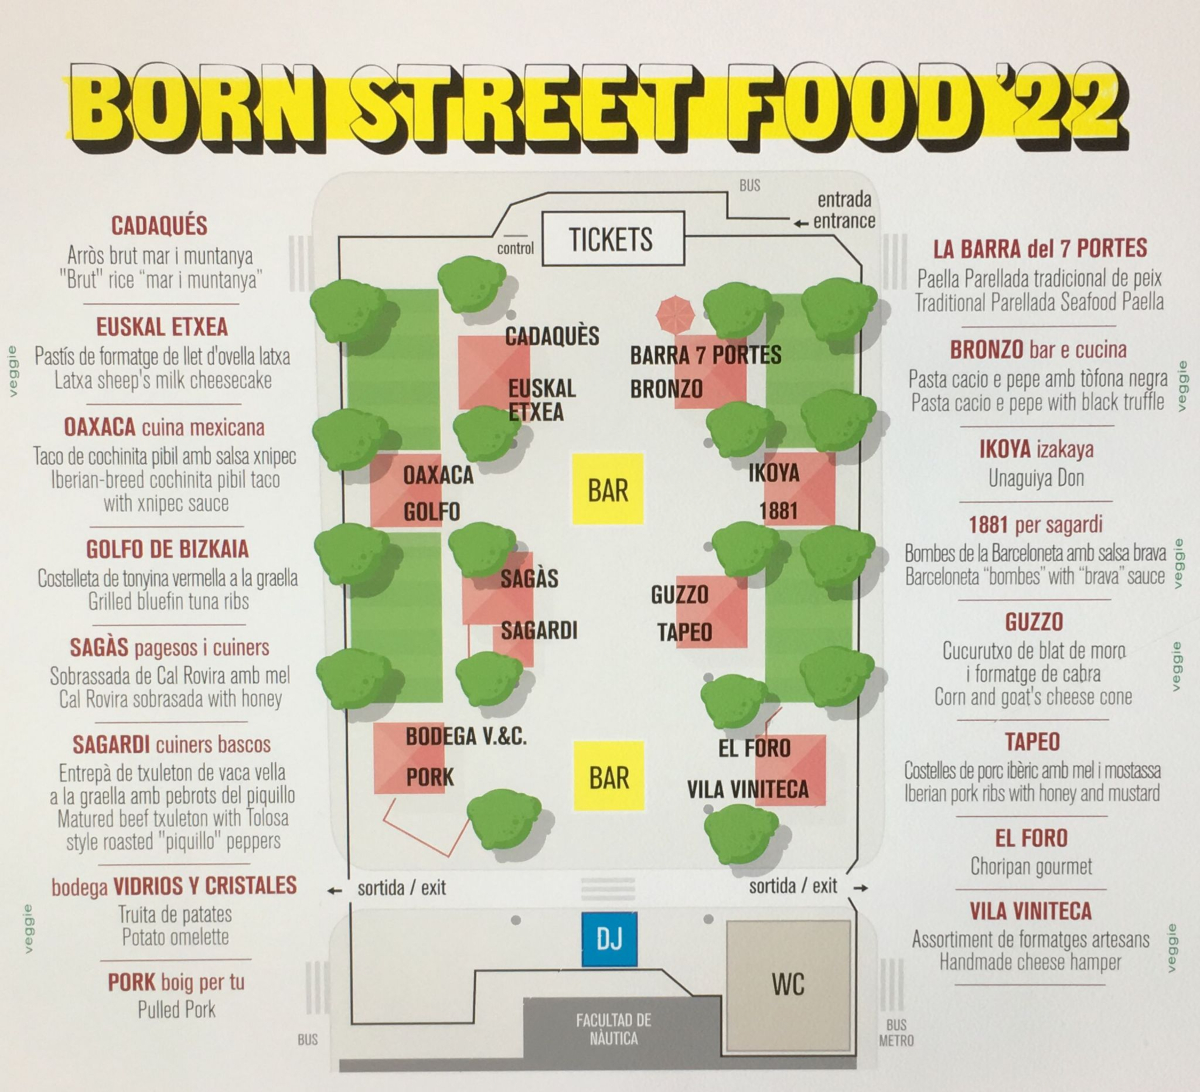 Born Street Food '22